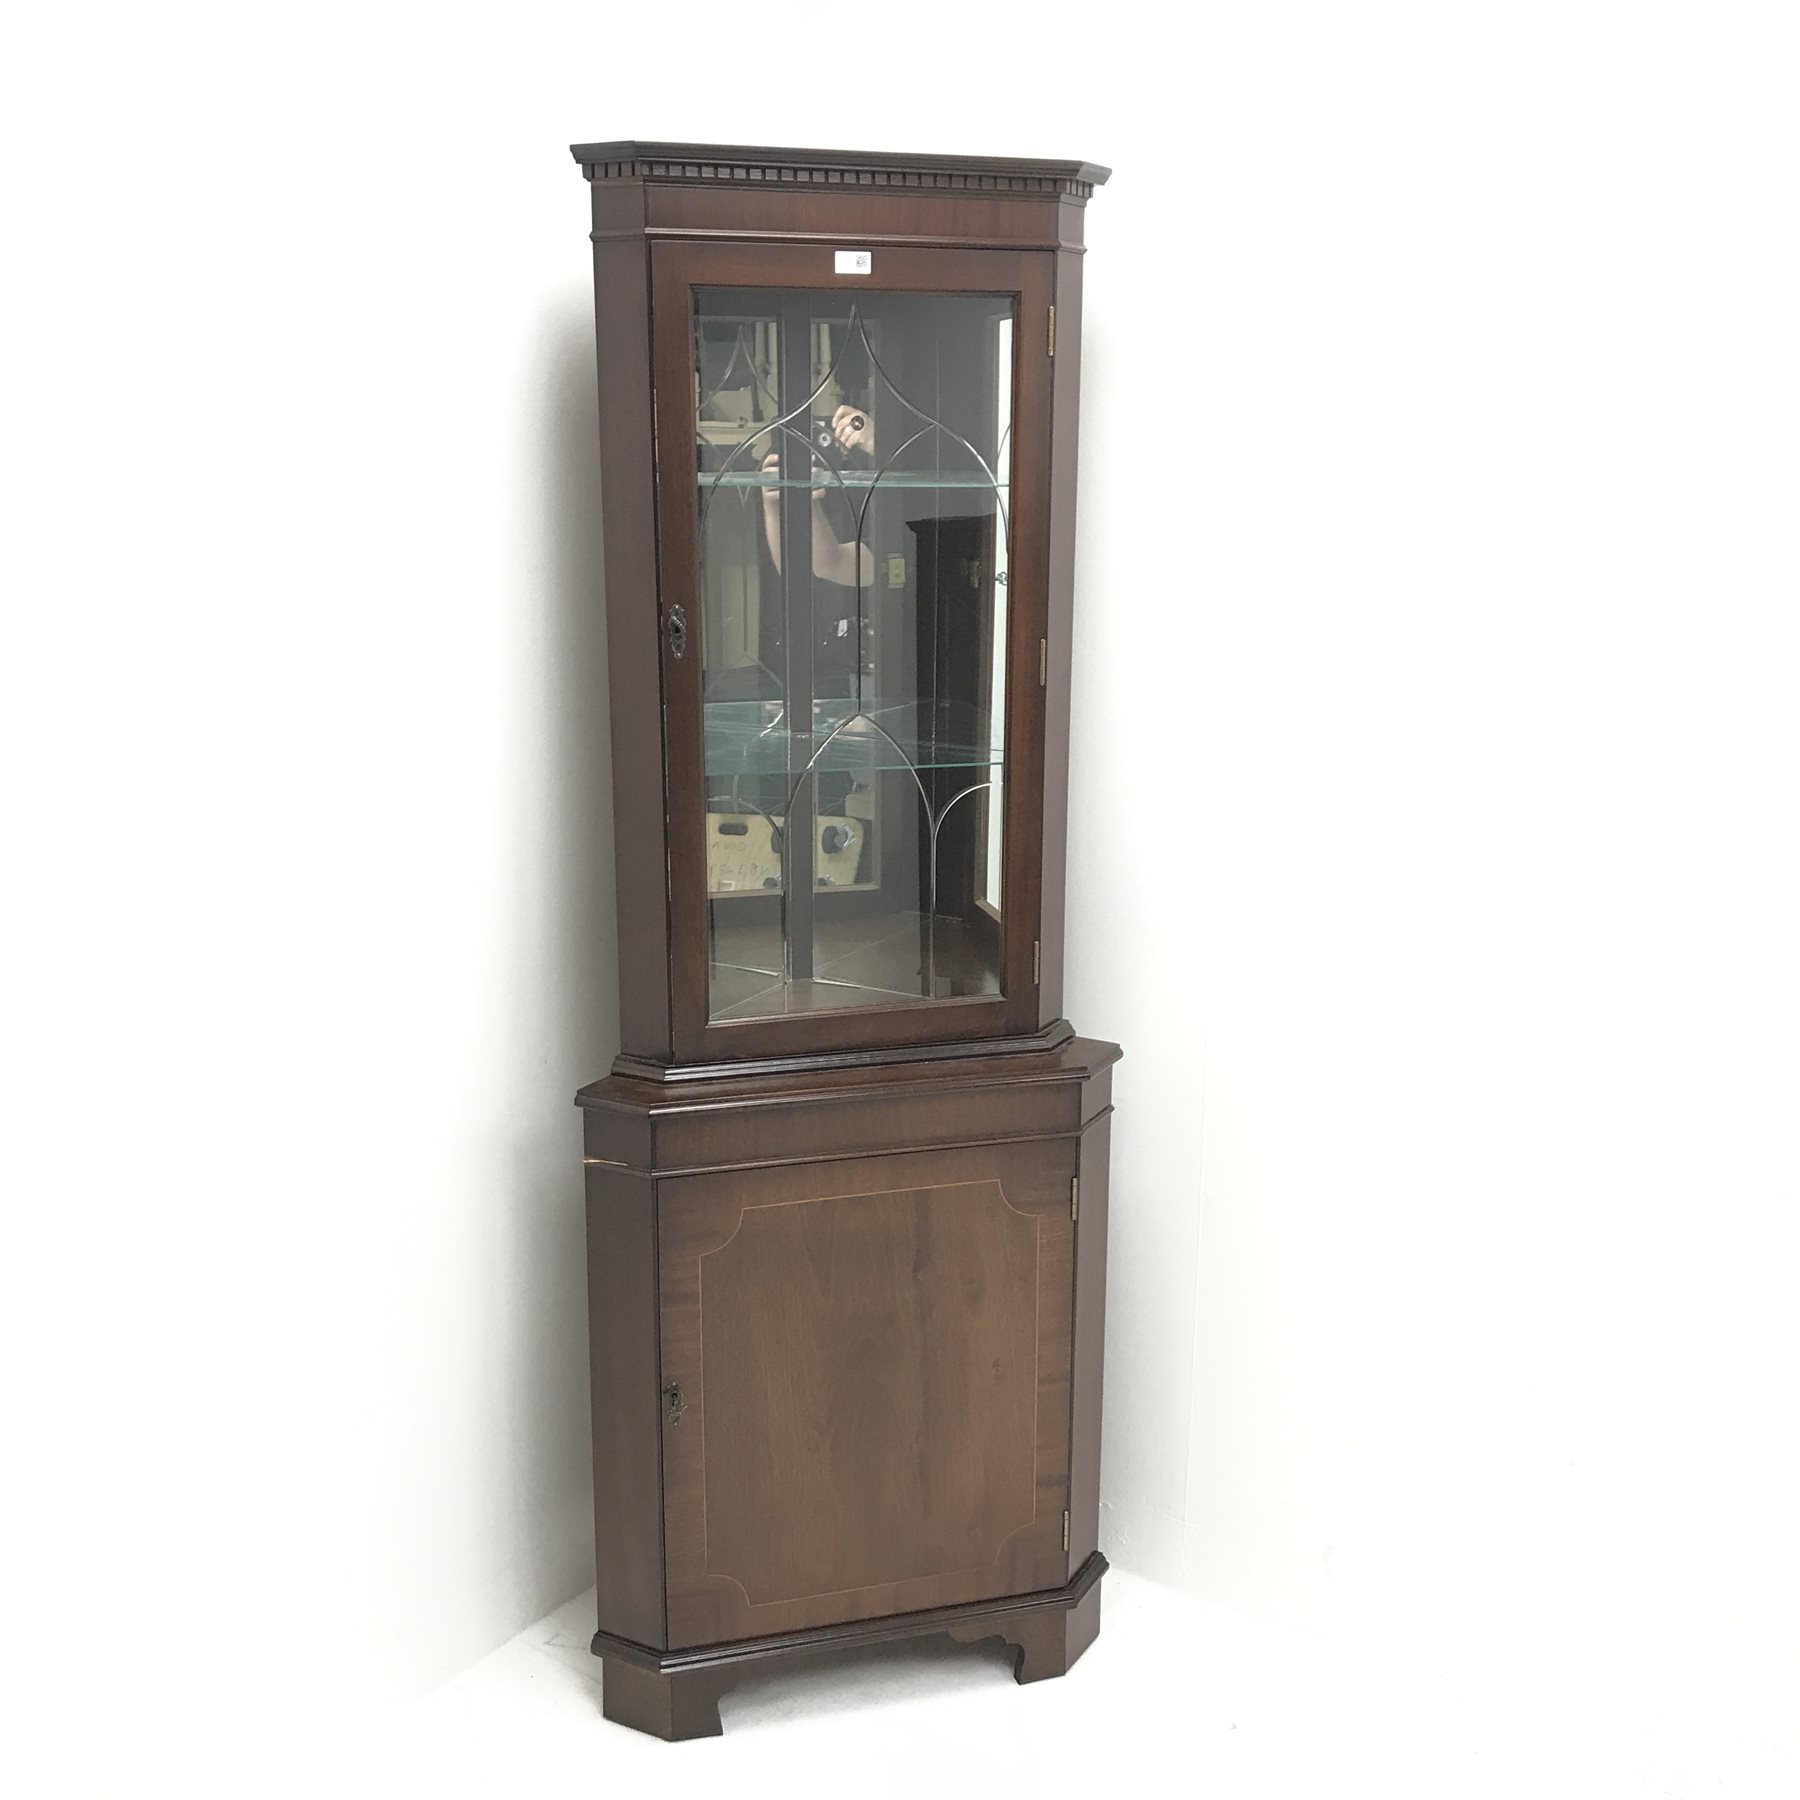 20th century mahogany corner display cabinet, single glazed door enclosing two shelves above single - Image 2 of 3